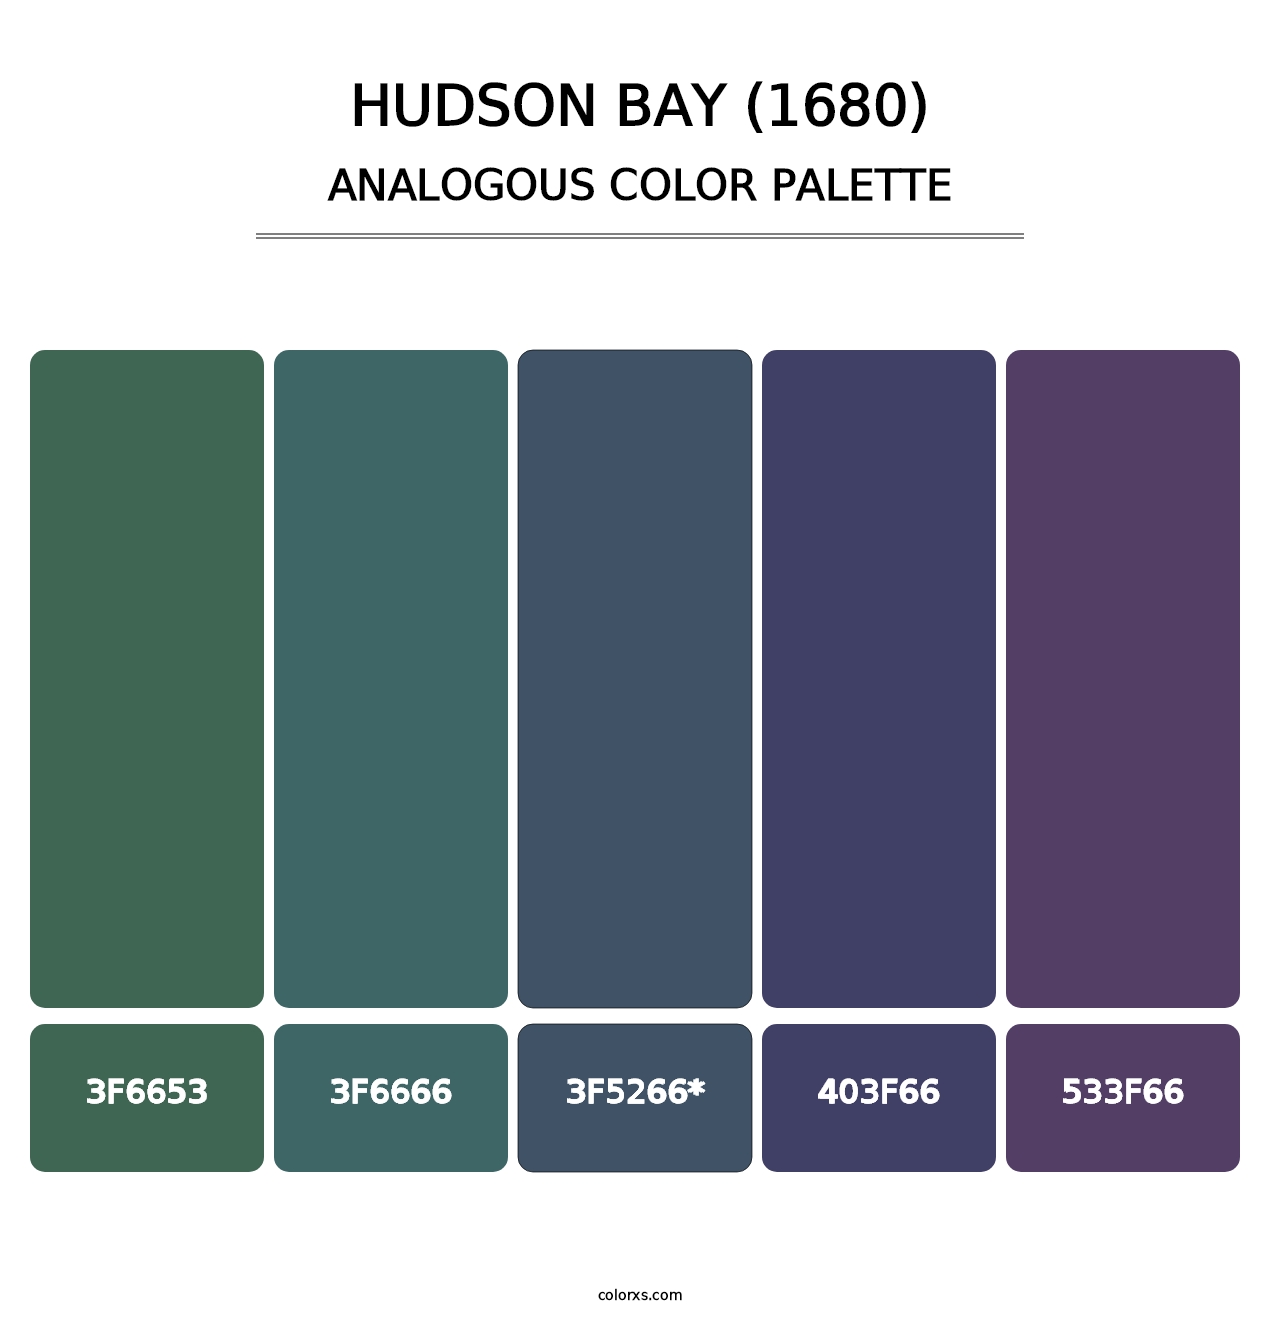 Hudson Bay (1680) - Analogous Color Palette